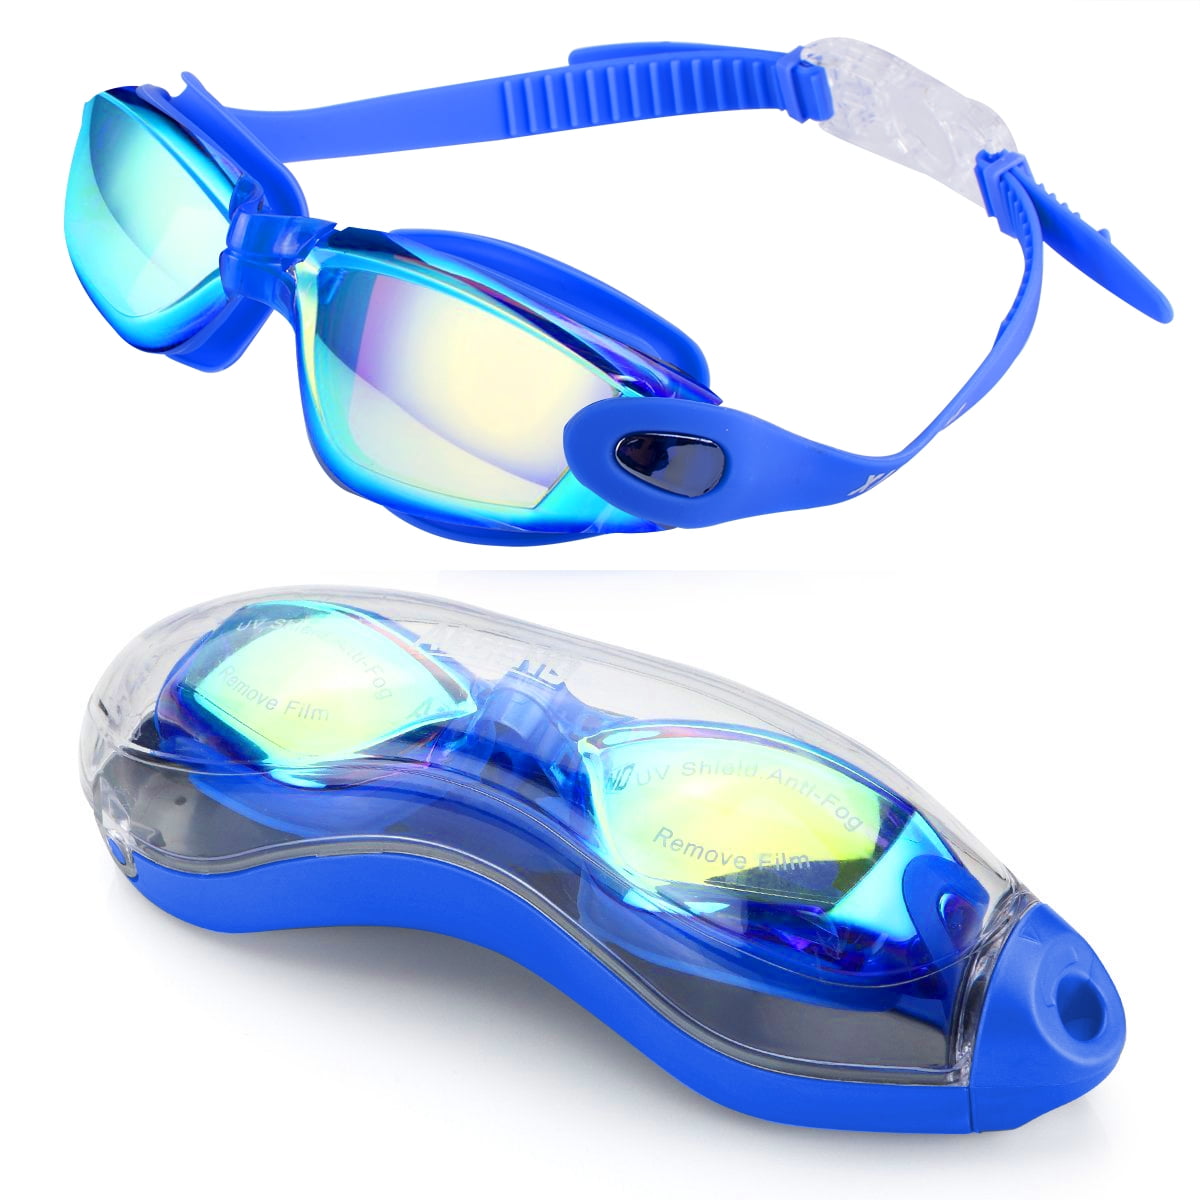 Swimming Goggles Kids Eyewear Safety Anti-Fog UV Eye Protection Swim Accessories 